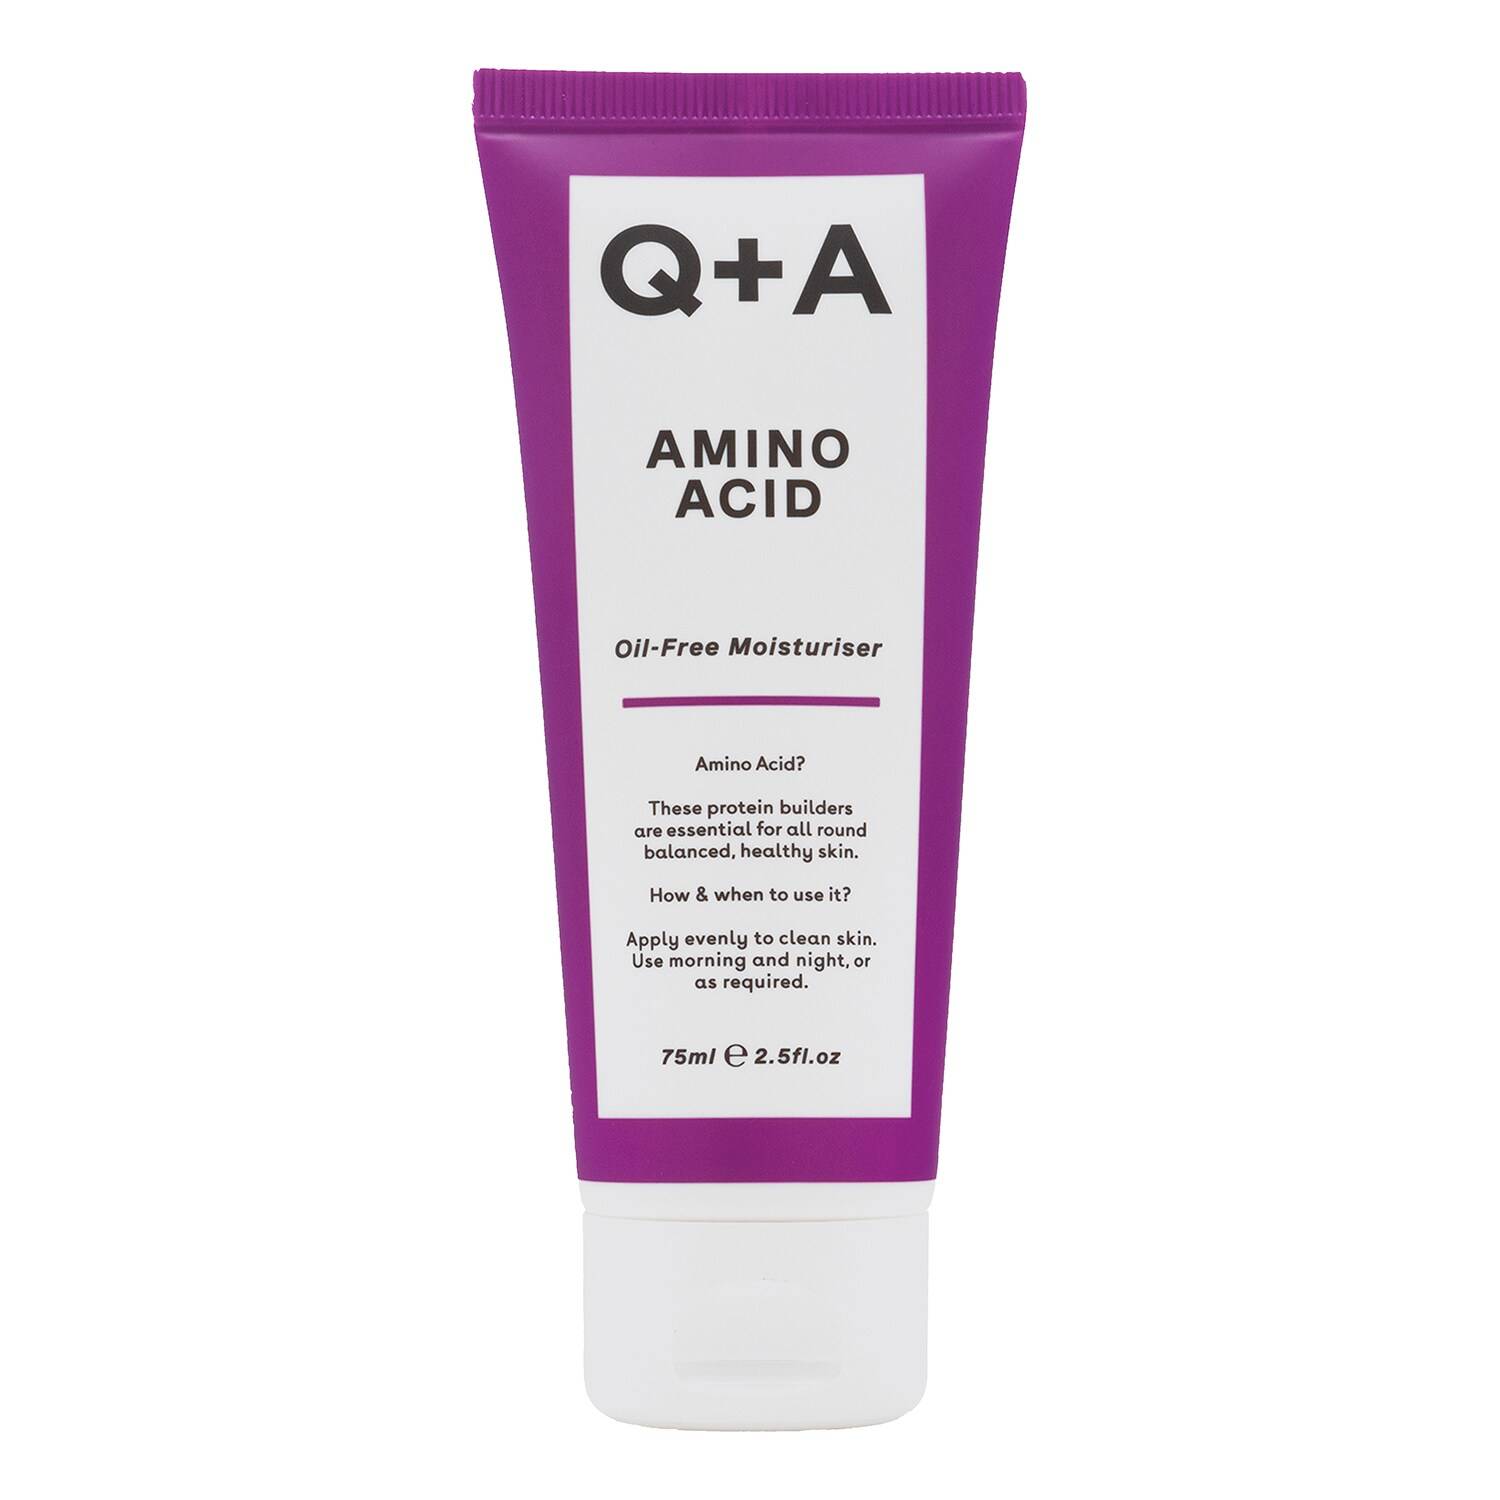 Q+A Amino Acid Oil-Free Moisturiser  75ml